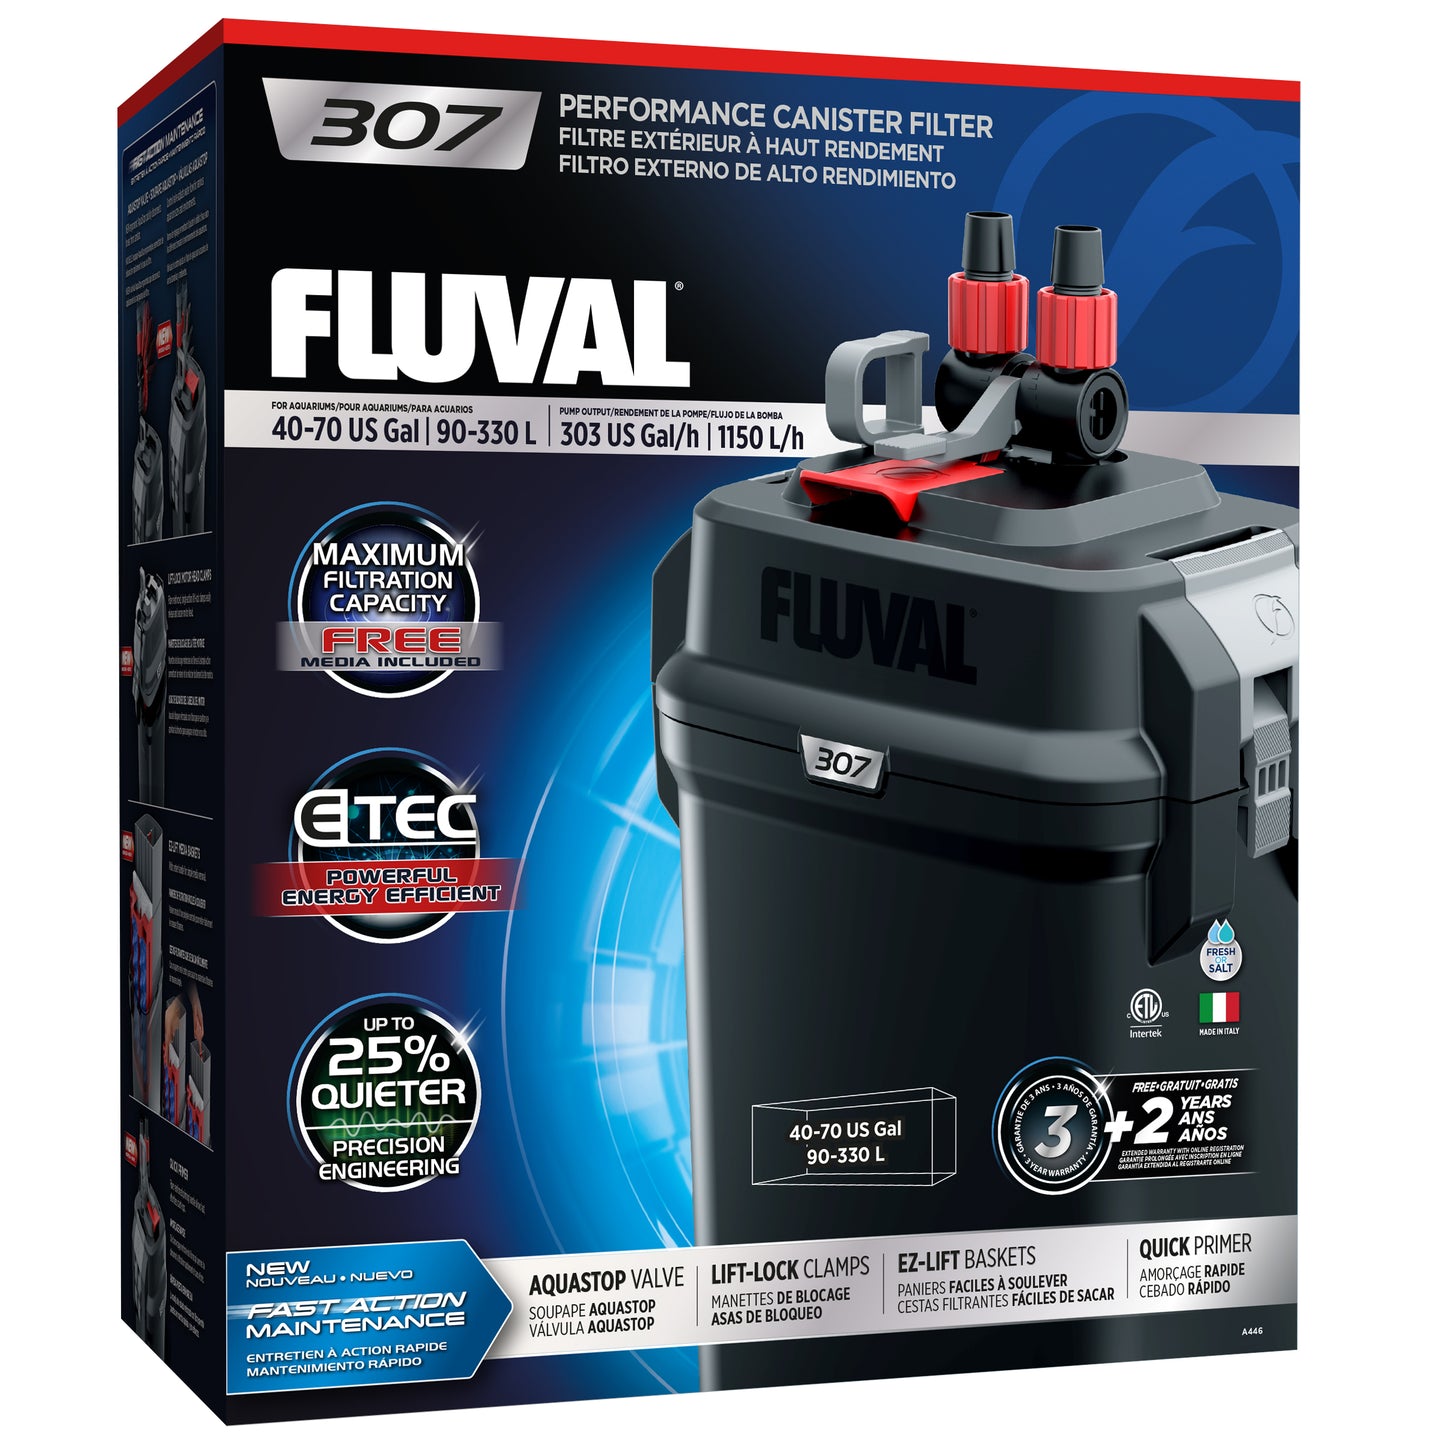 Fluval 7 Series Canister Filter